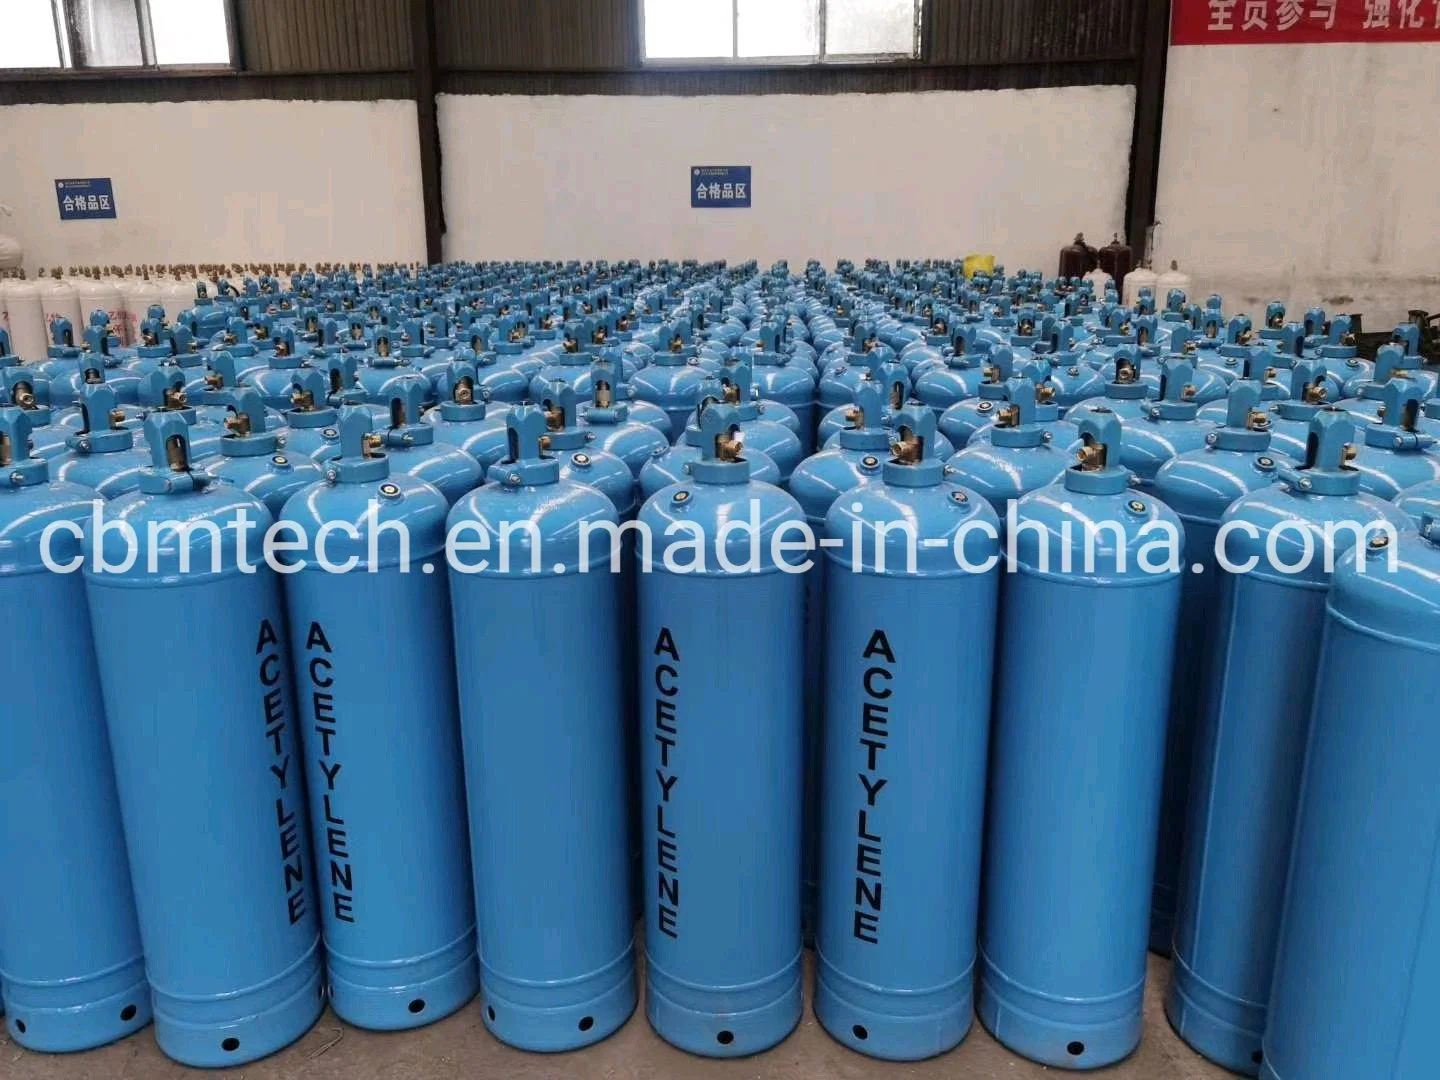 Steel Cylinders for Acetylene Storage